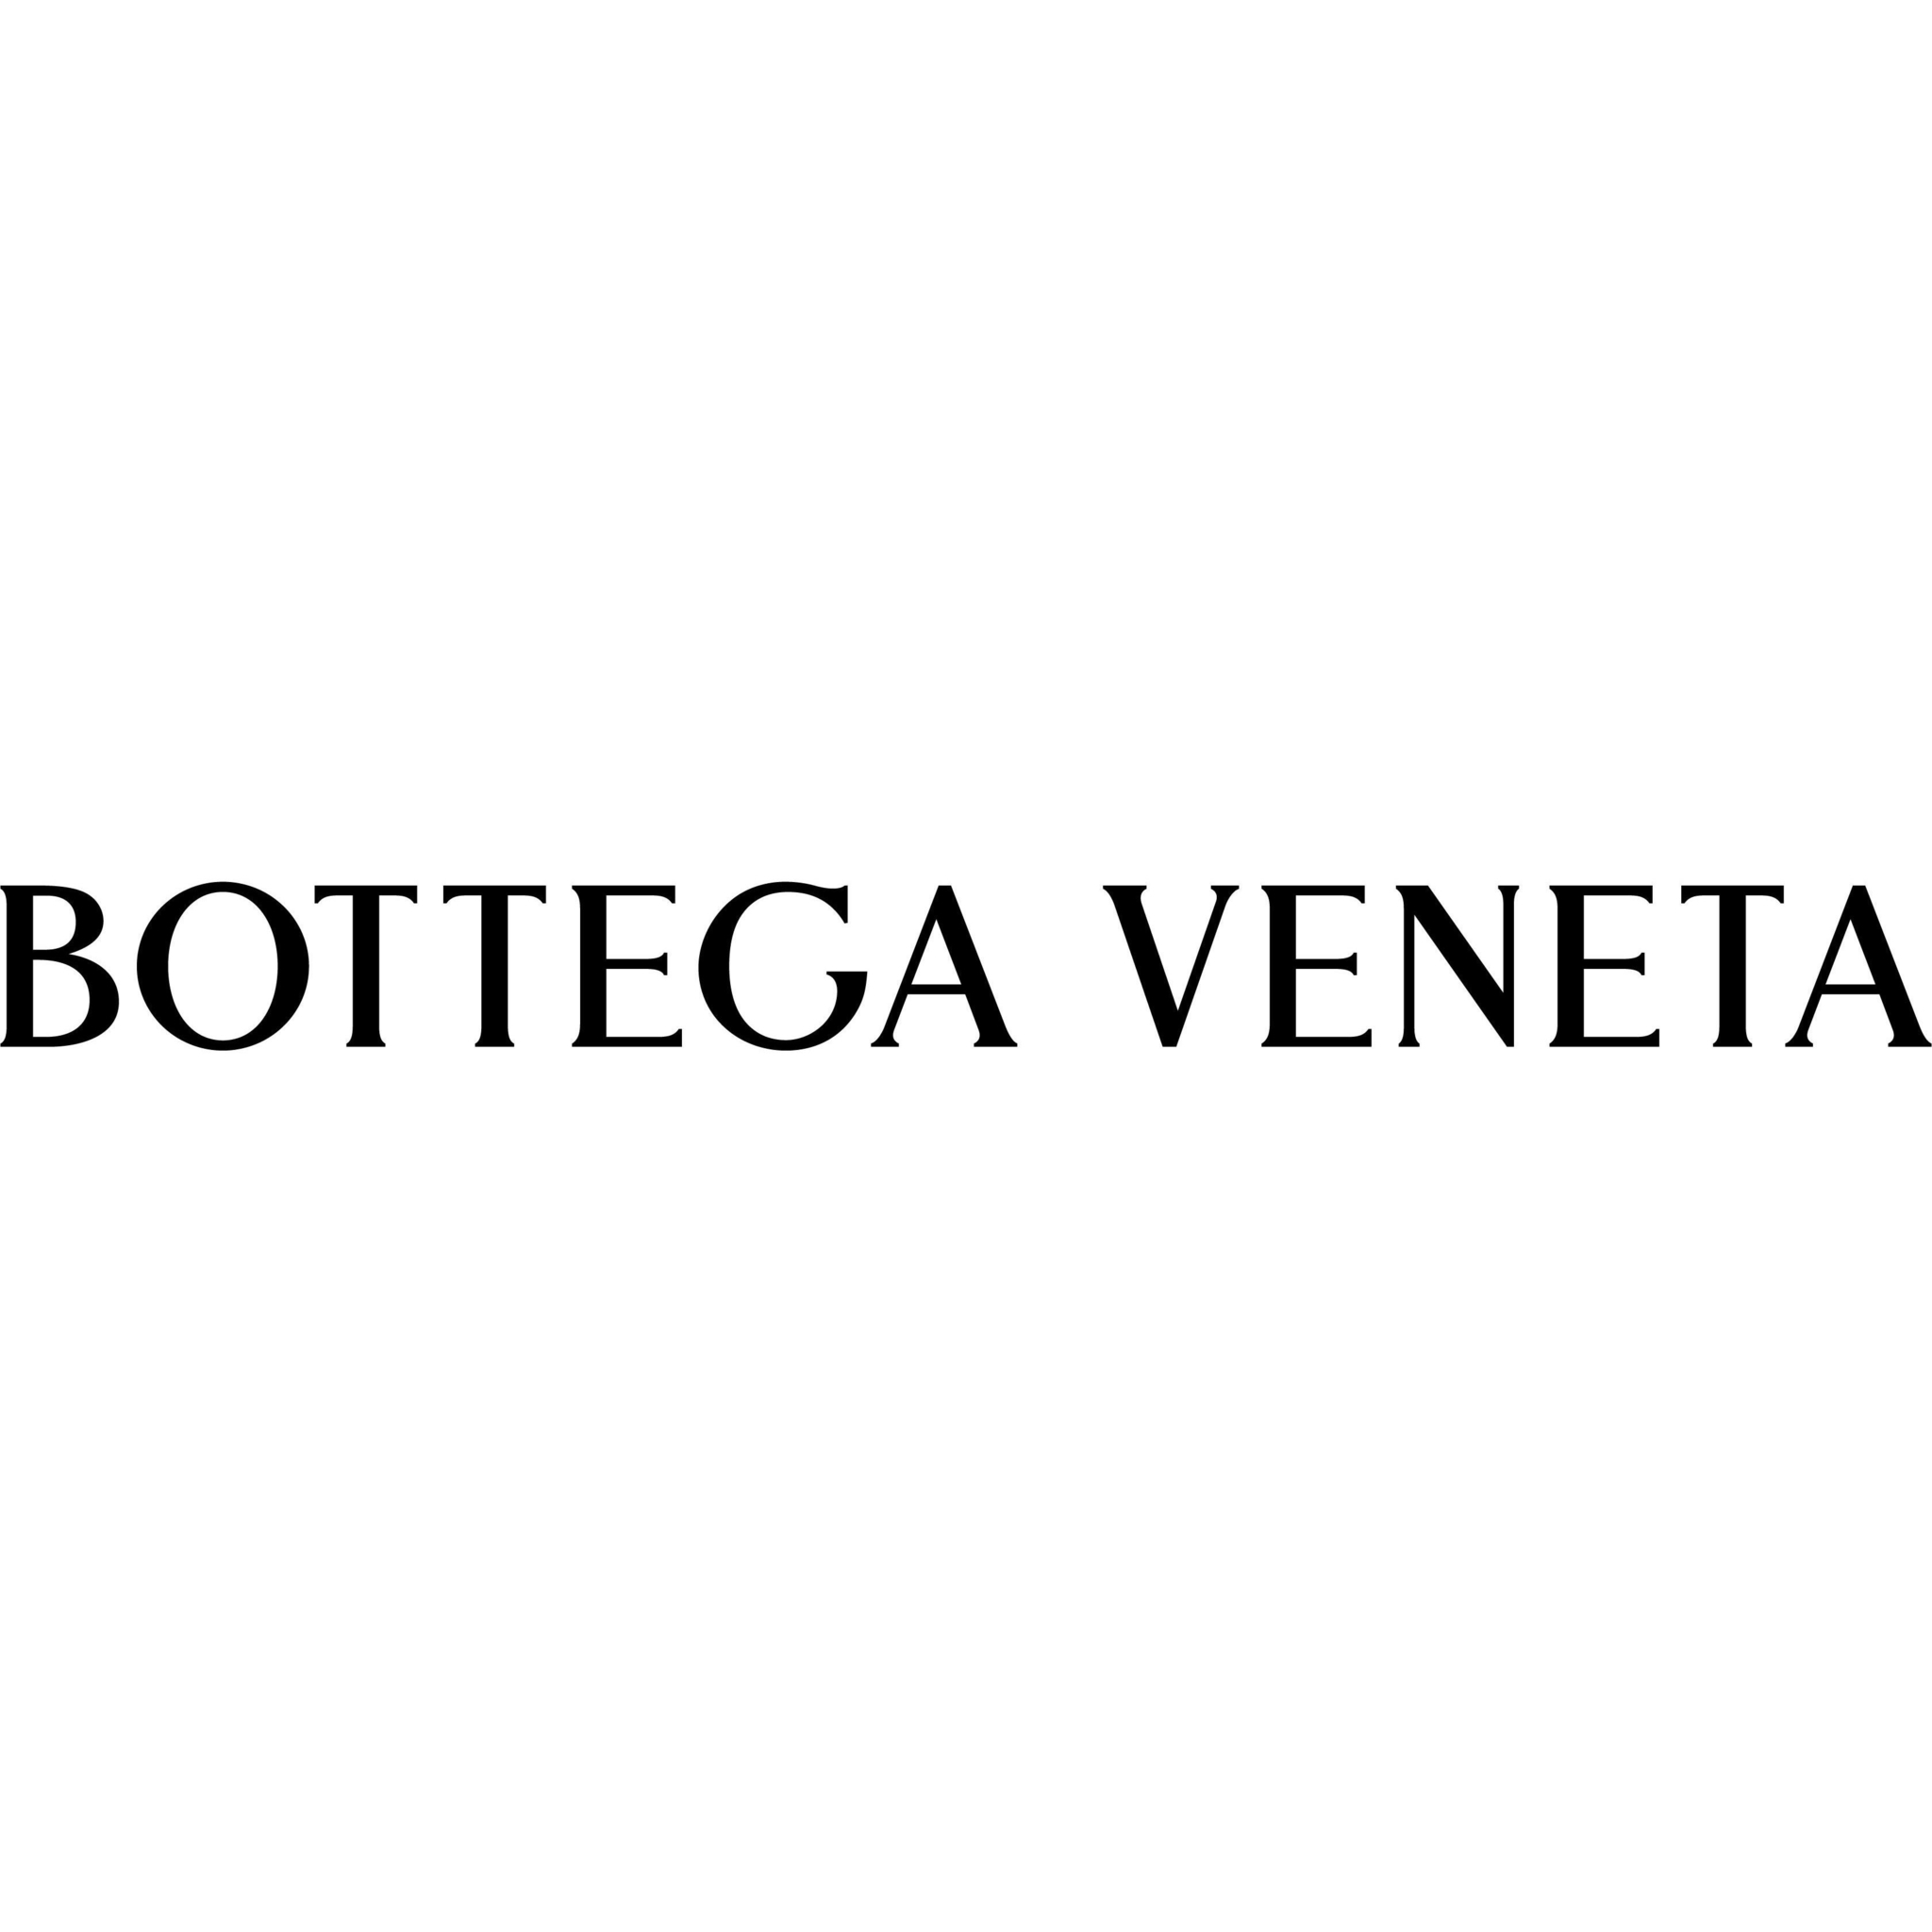 Bottega Veneta Vancouver Holt Renfrew - Leather Goods Retailers